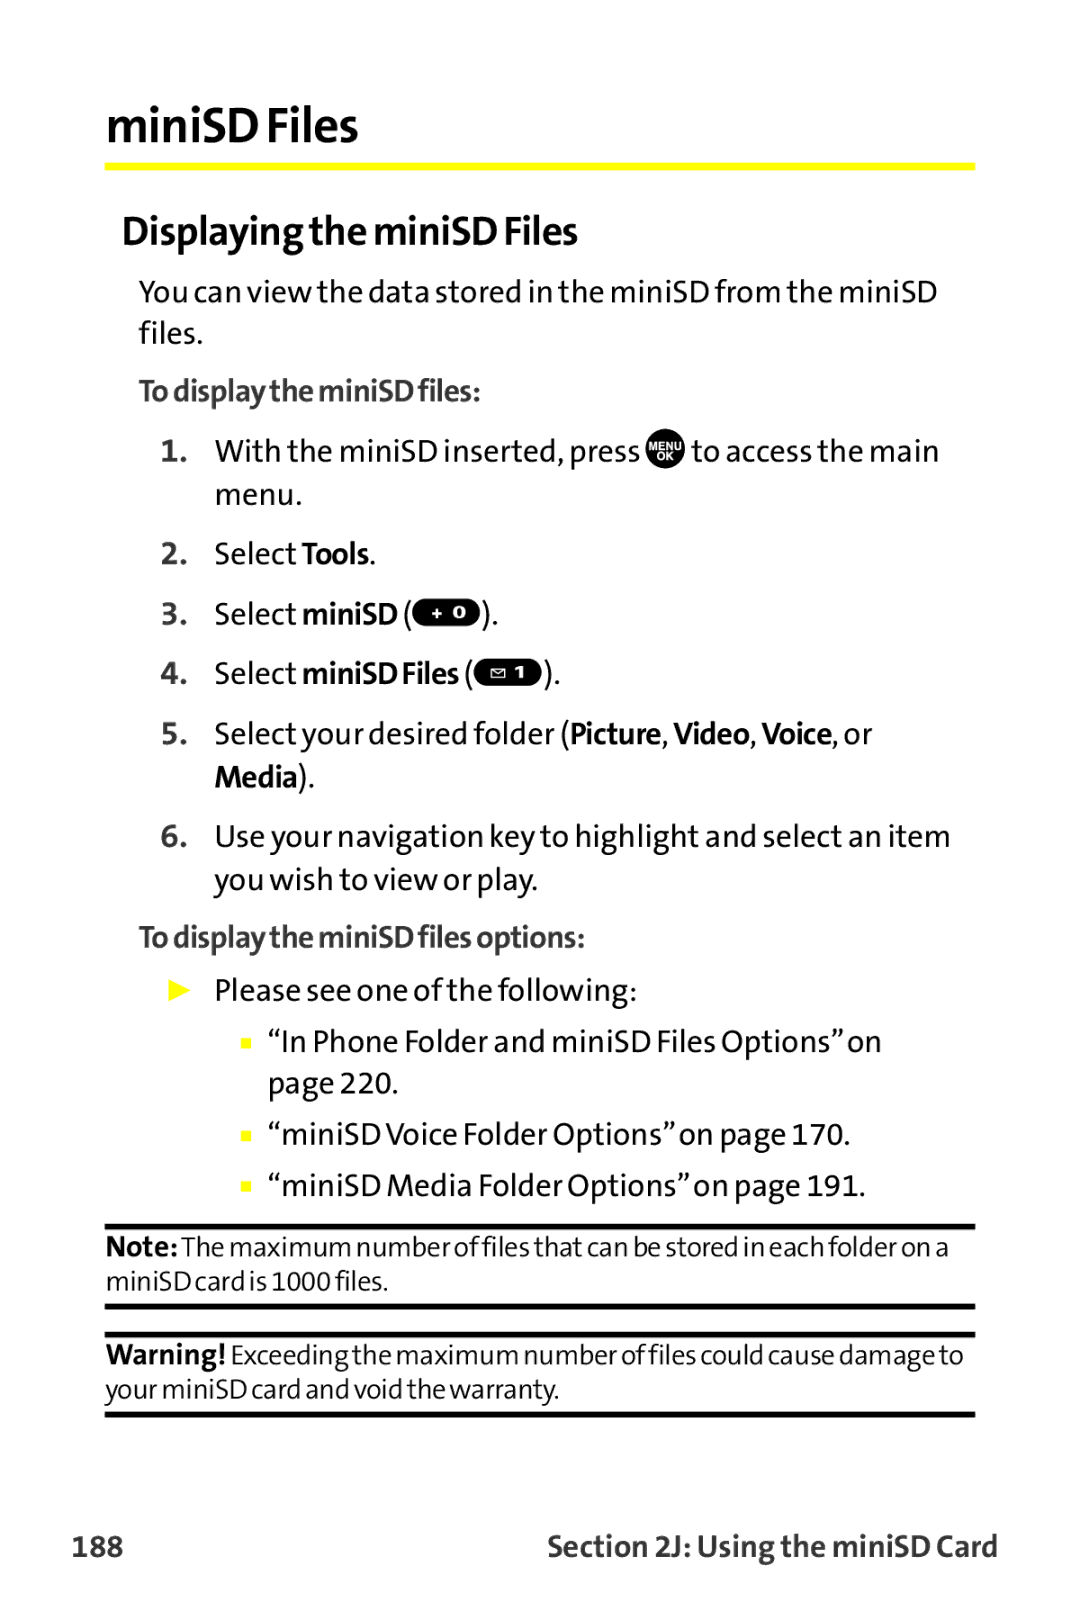 Sanyo MM-9000 manual MiniSD Files, Displaying the miniSD Files, TodisplaytheminiSDfilesoptions, 188 